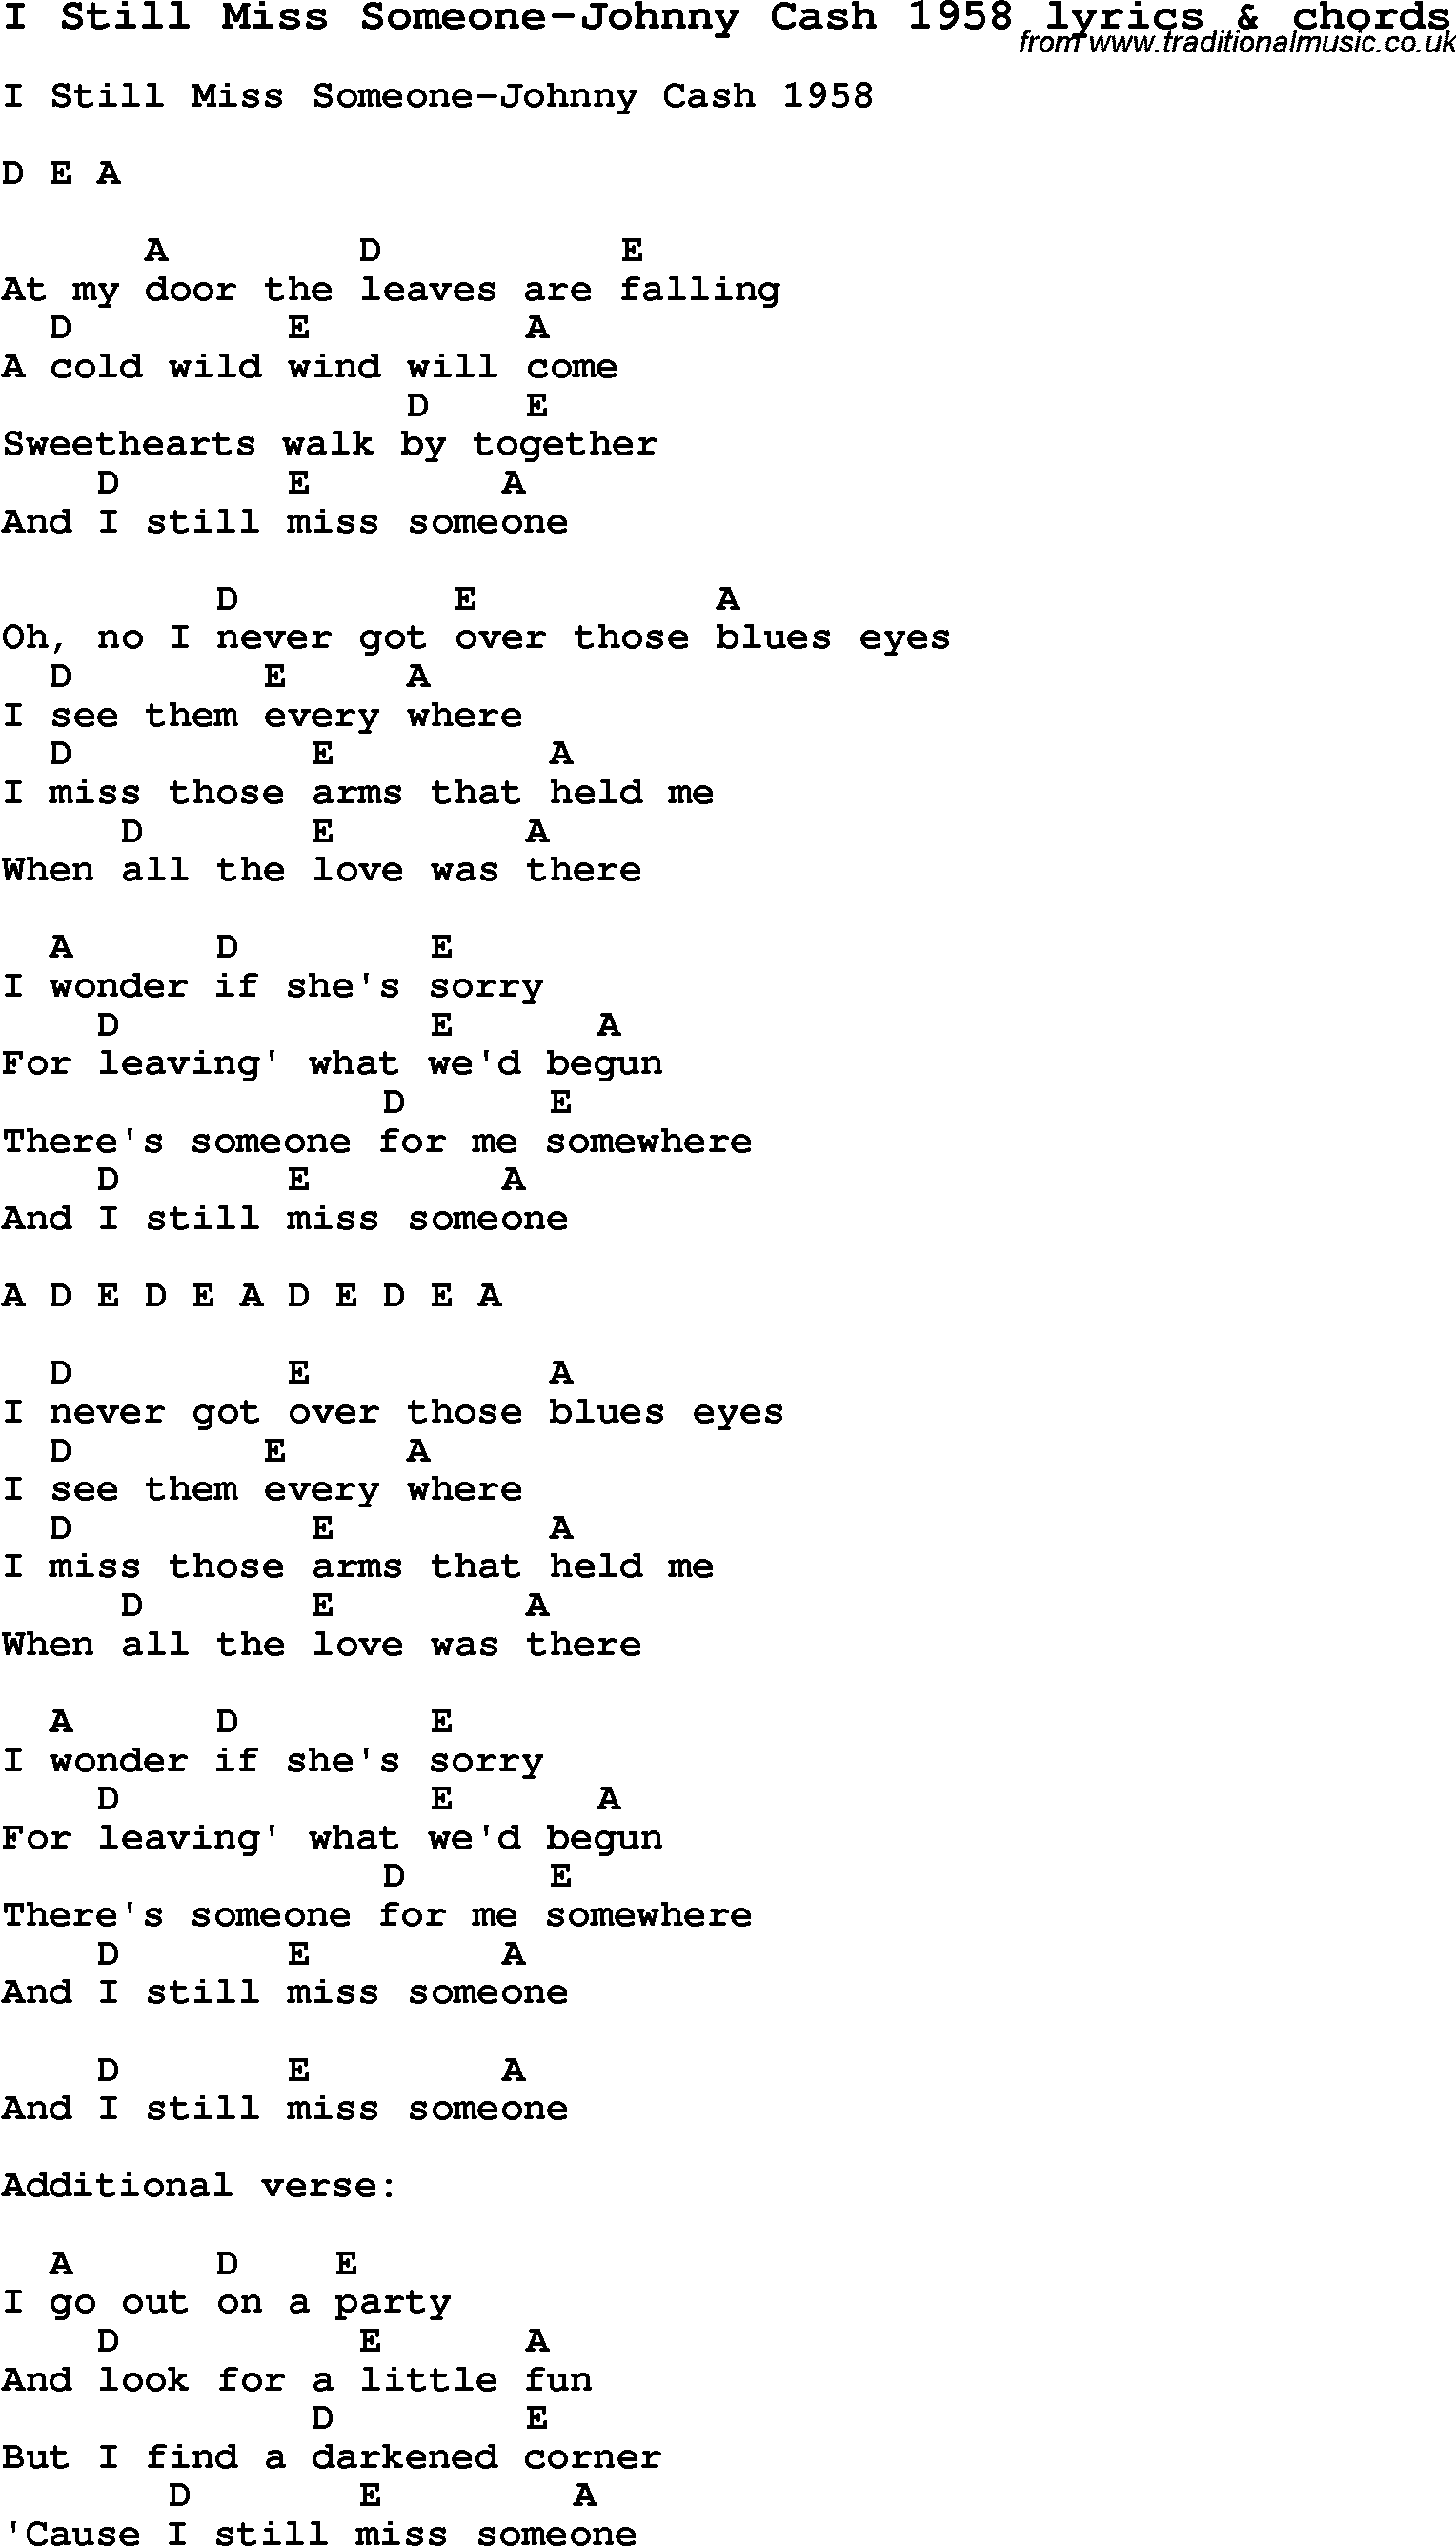 Love Song Lyrics for: I Still Miss Someone-Johnny Cash 1958 with chords for Ukulele, Guitar Banjo etc.